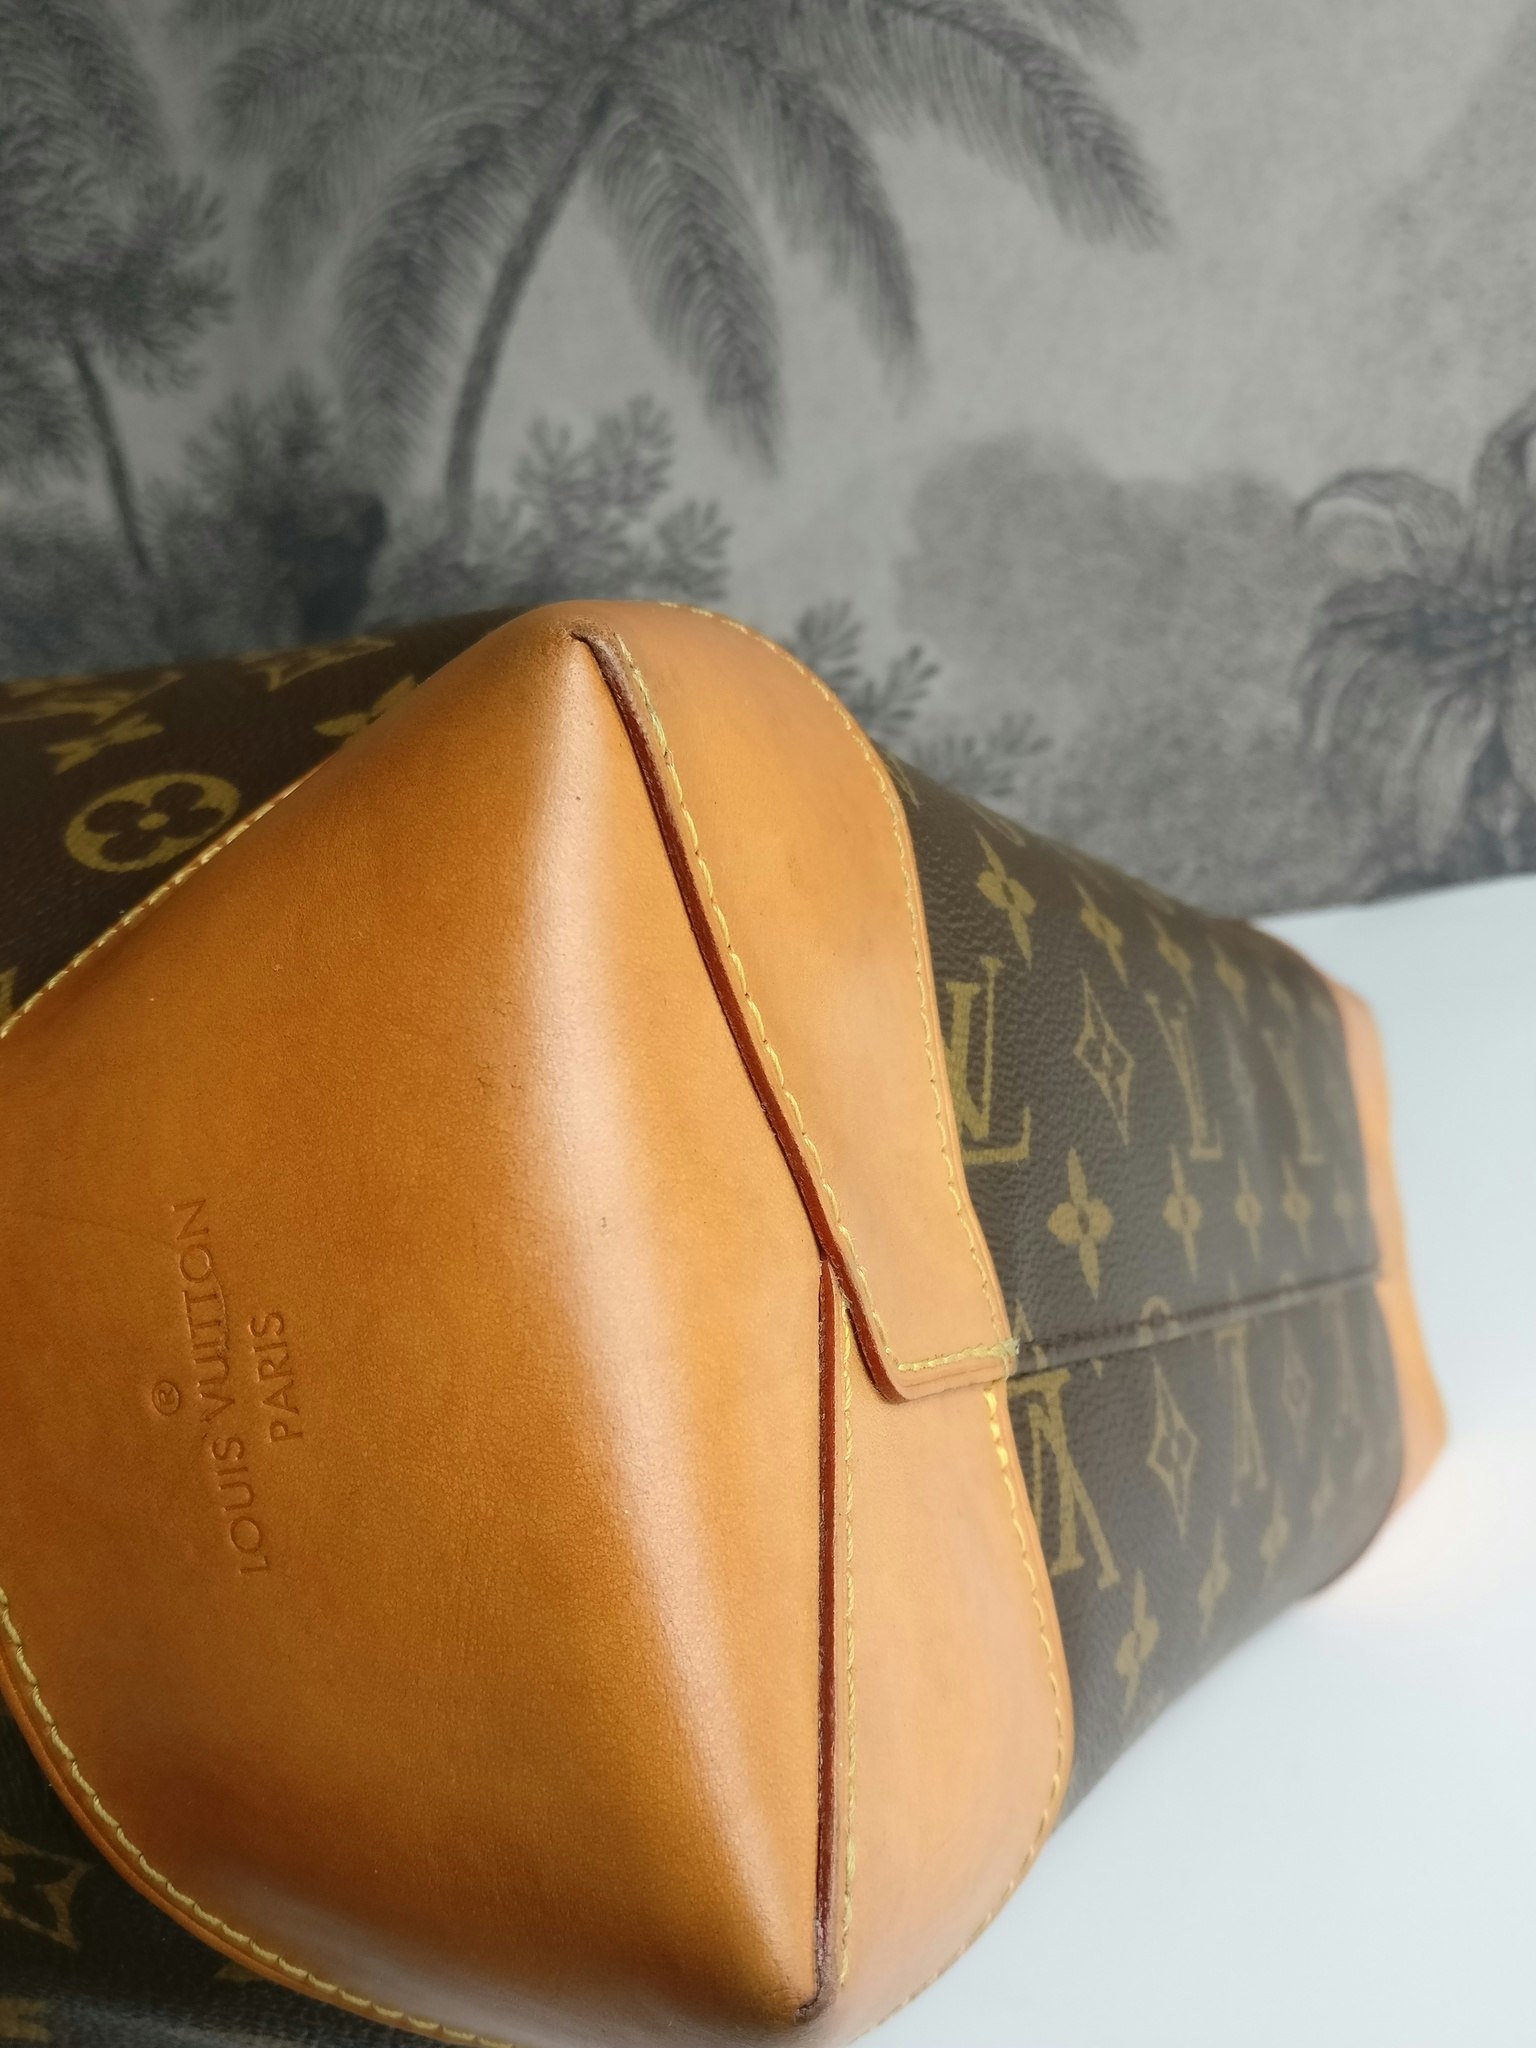 Louis Vuitton, 'Berri MM' bag with 'Animal MNG Camel' strap. - Bukowskis